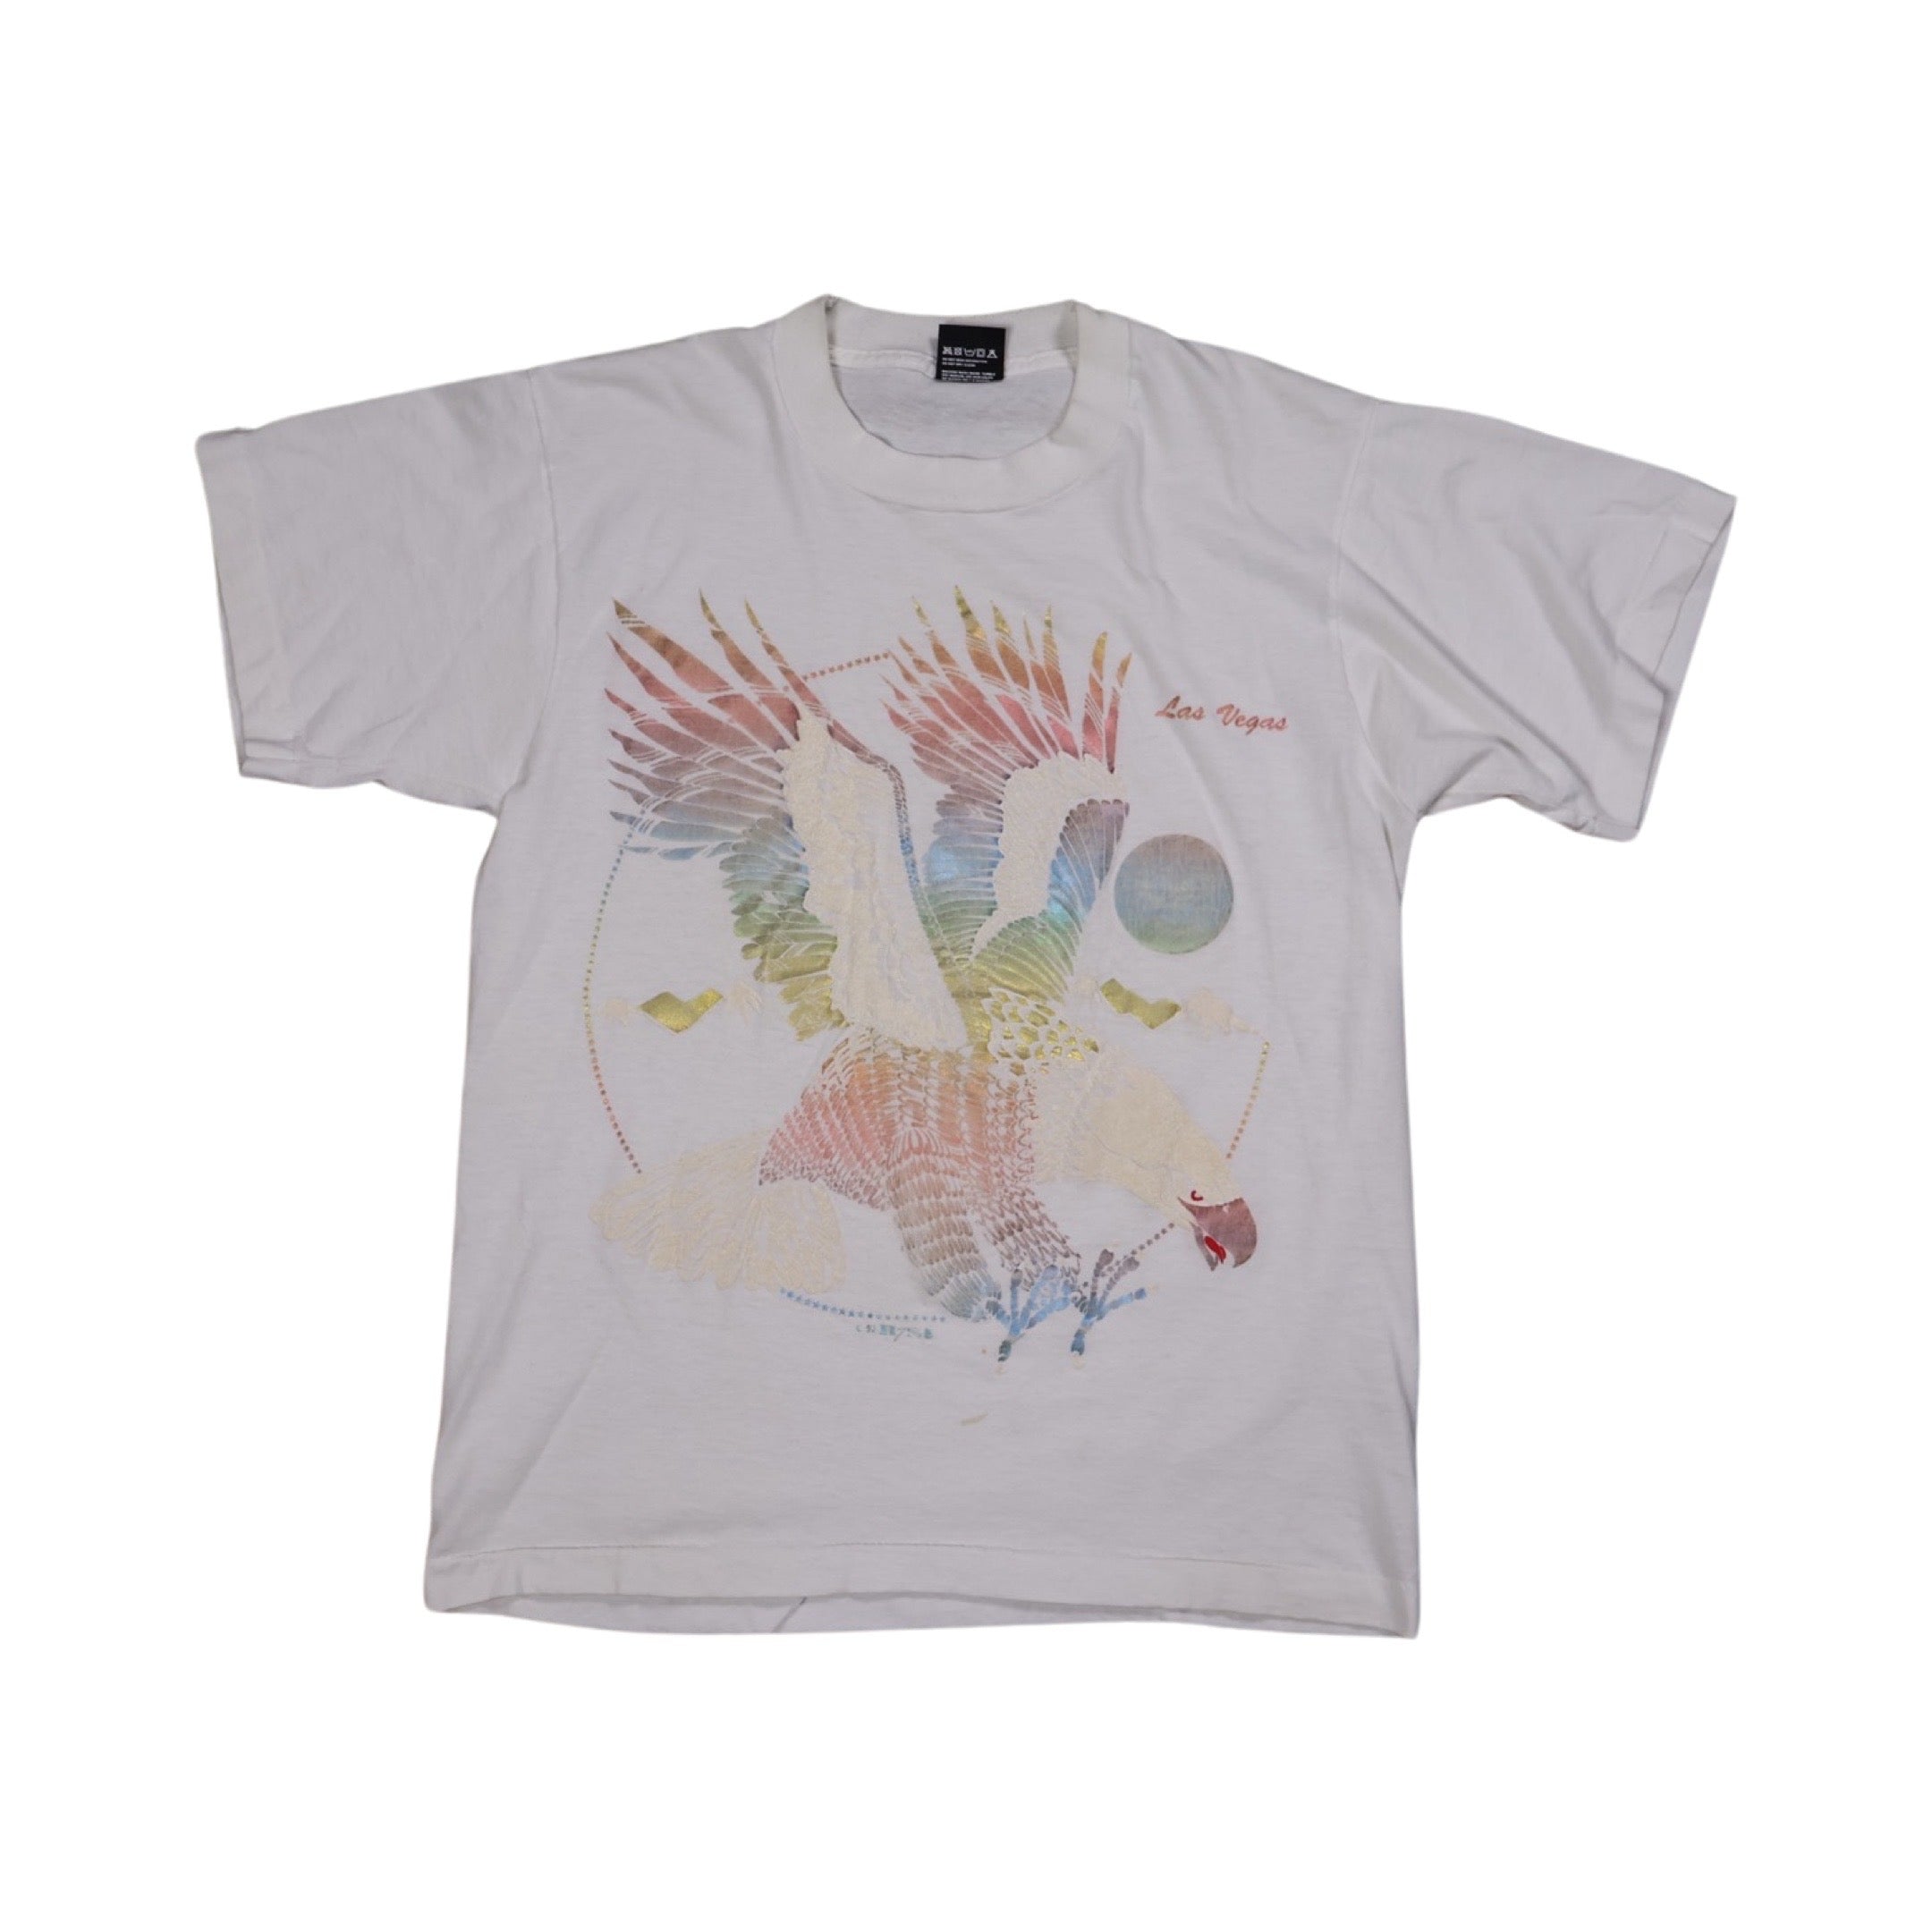 Las Vegas Eagle 1992 T-Shirt (Medium)